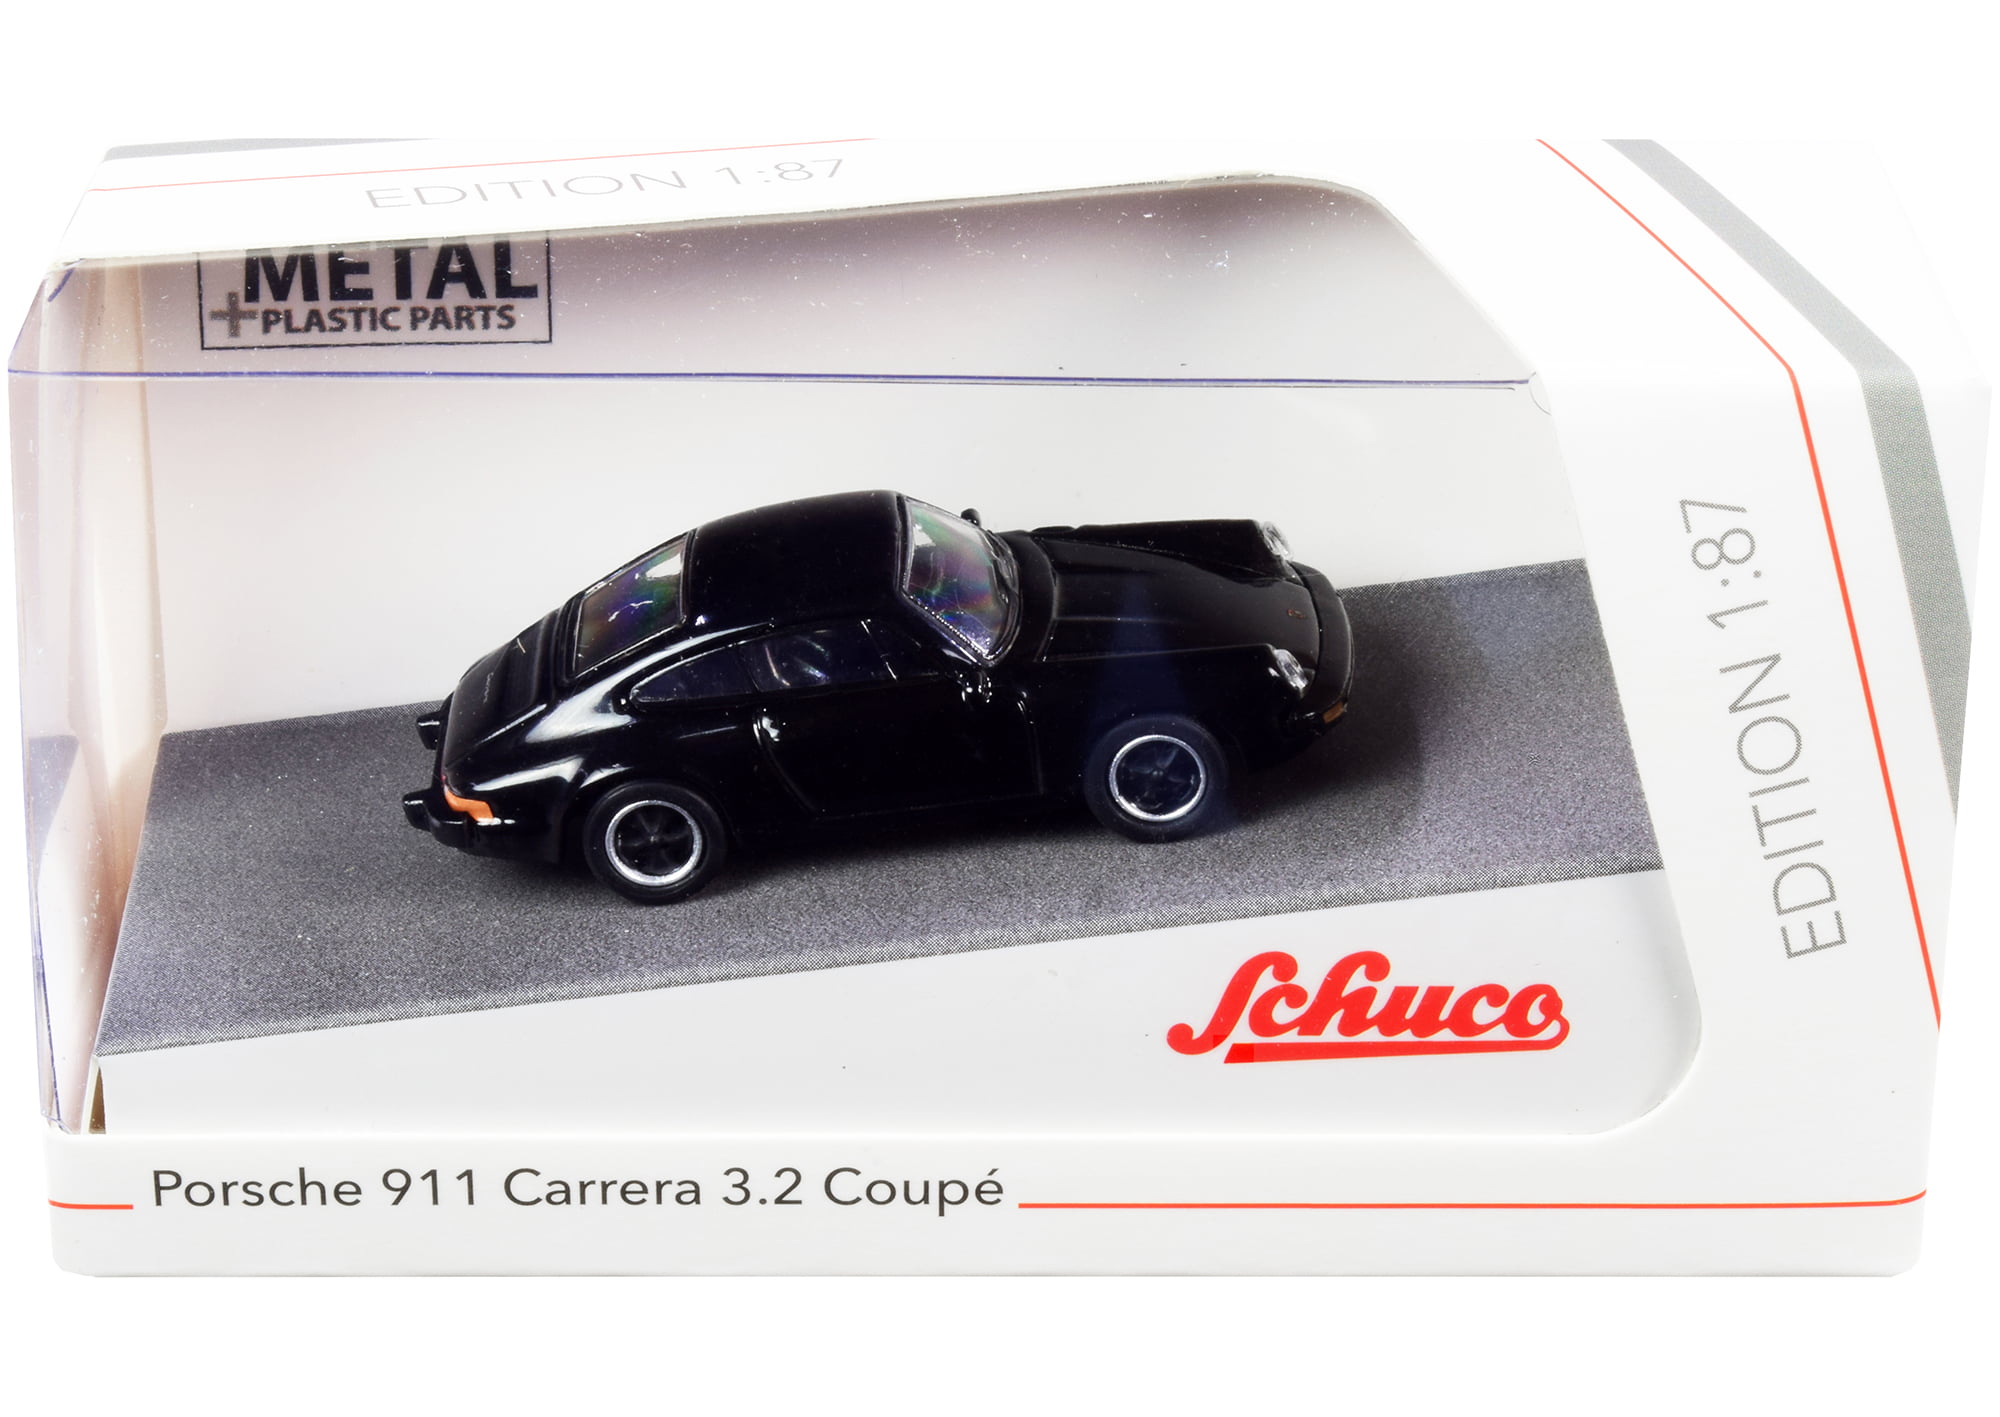 Porsche 911 Carrera 3.2 Coupe - Diecast Model Car Black Schuco 1:87 HO Scale 